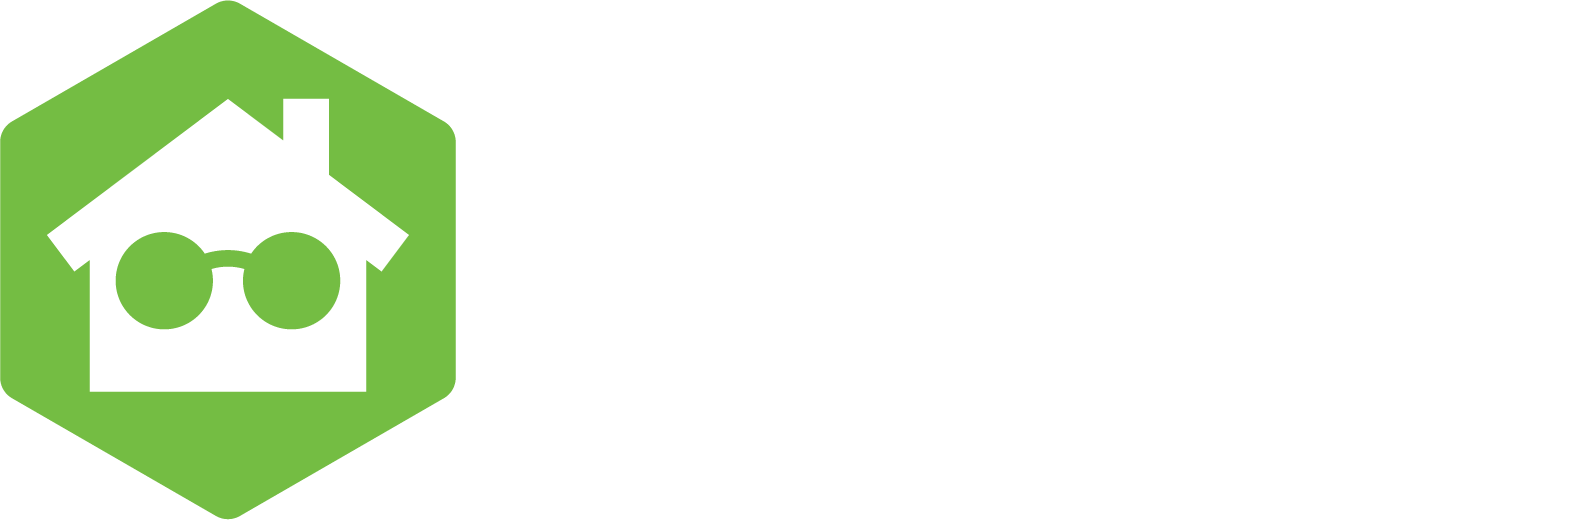 GEM Crystal